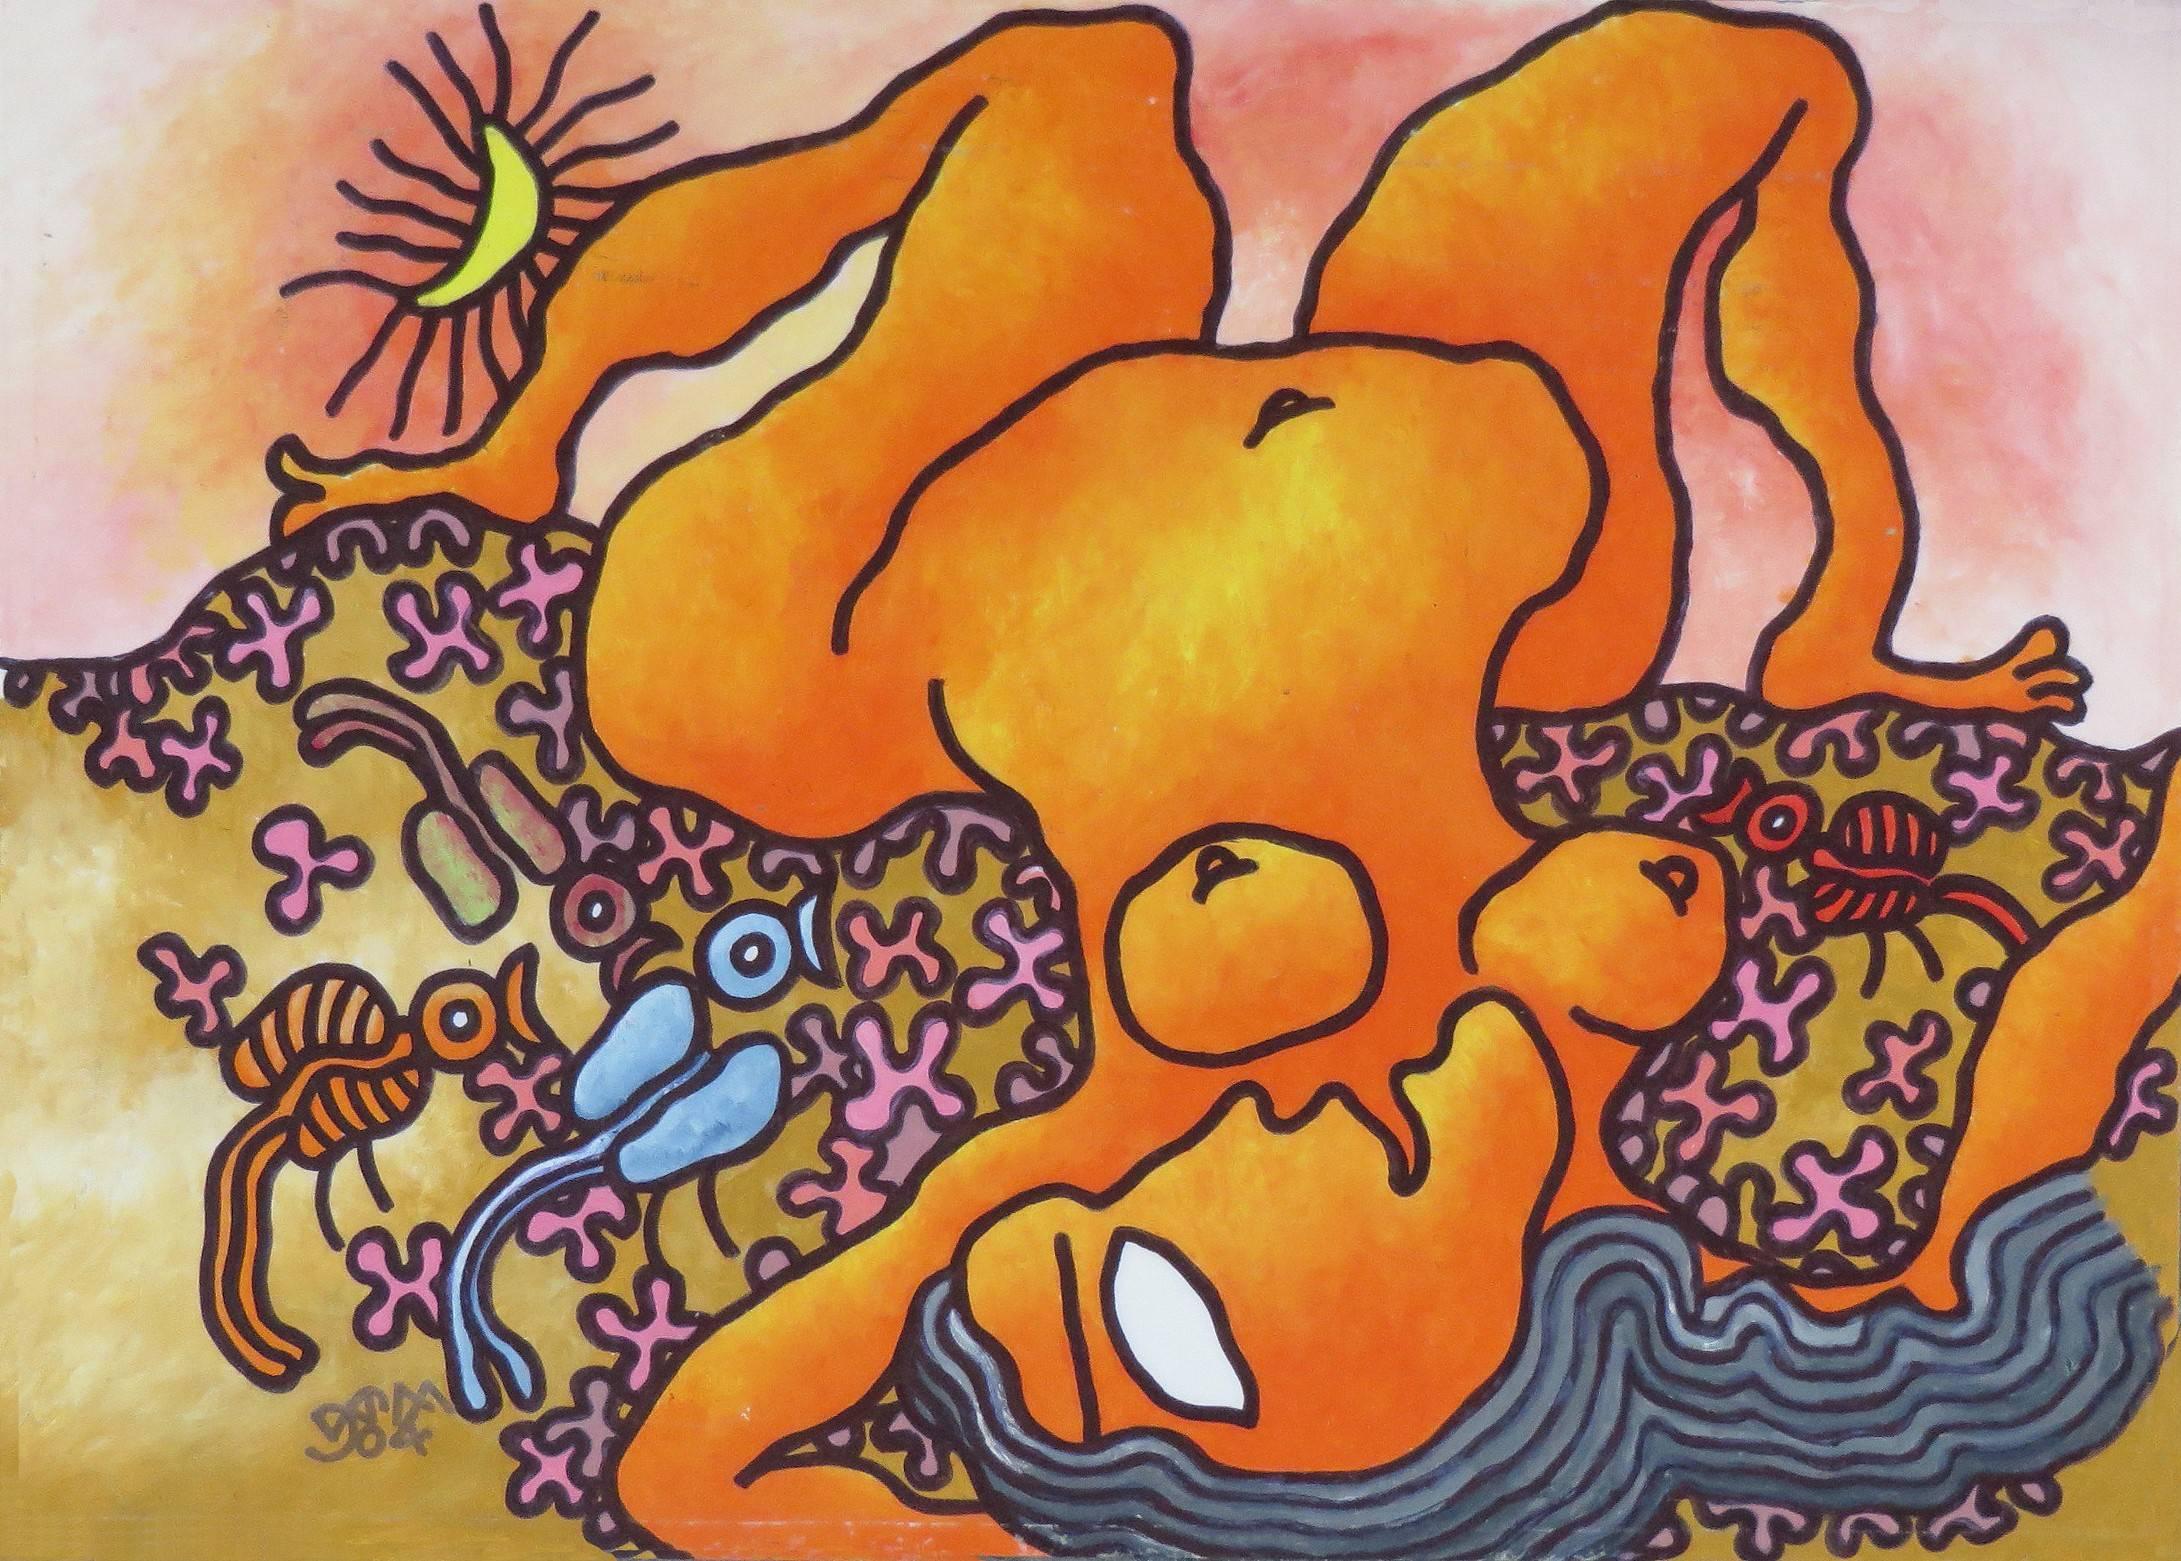 Prokash Karmakar Figurative Painting - Large eyed Nude women on the beach with blue, orange and red birds